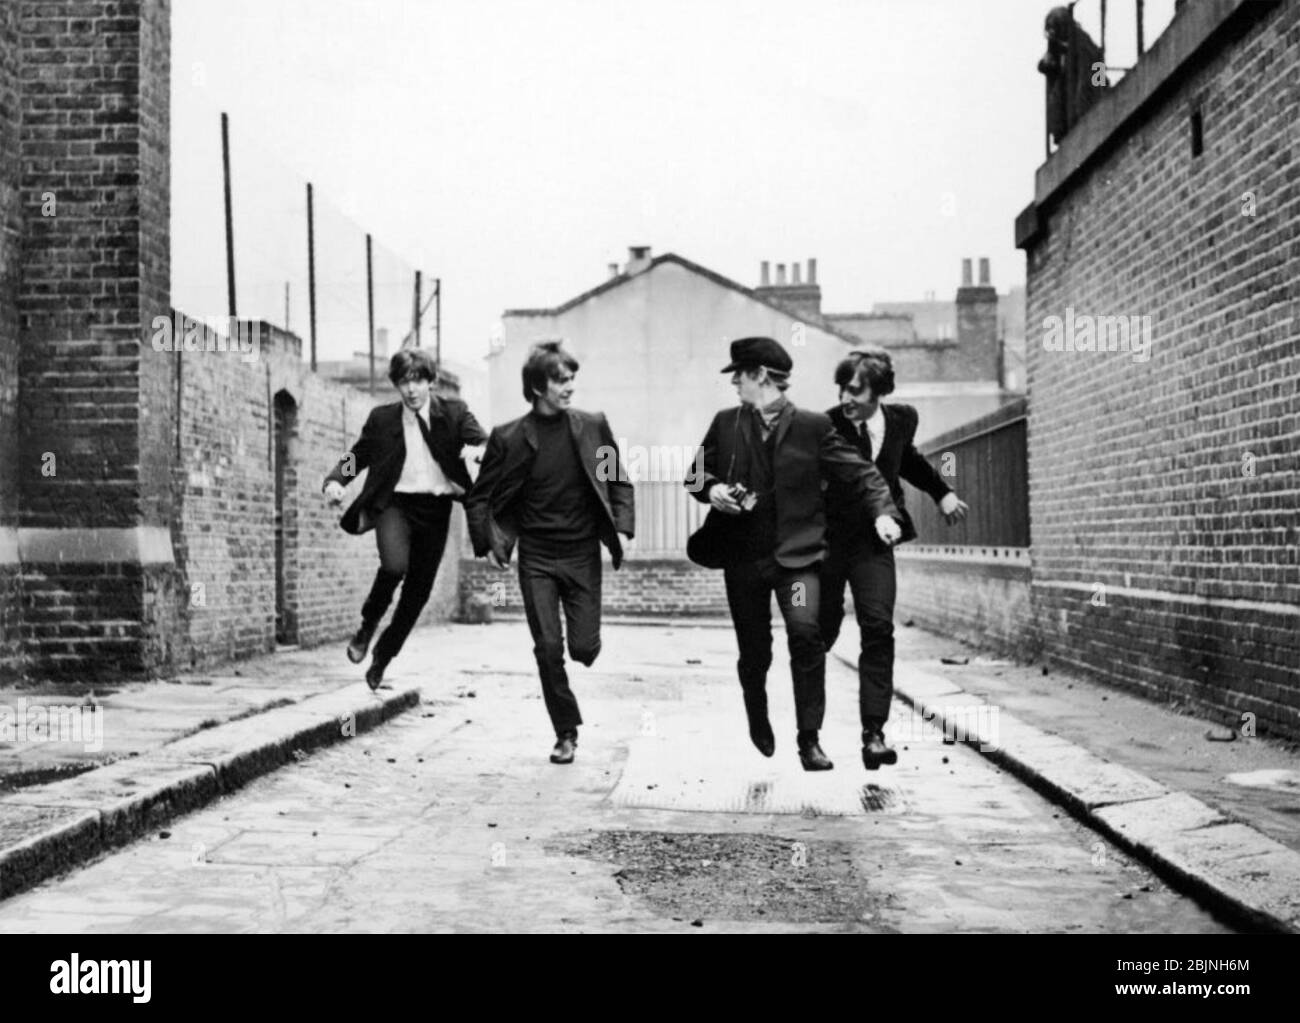 A HARD DAY'S NIGHT 1964 United Artists film with from left: Paul McCartney, George Harrison, John Lennon, Ringo Starr Stock Photo